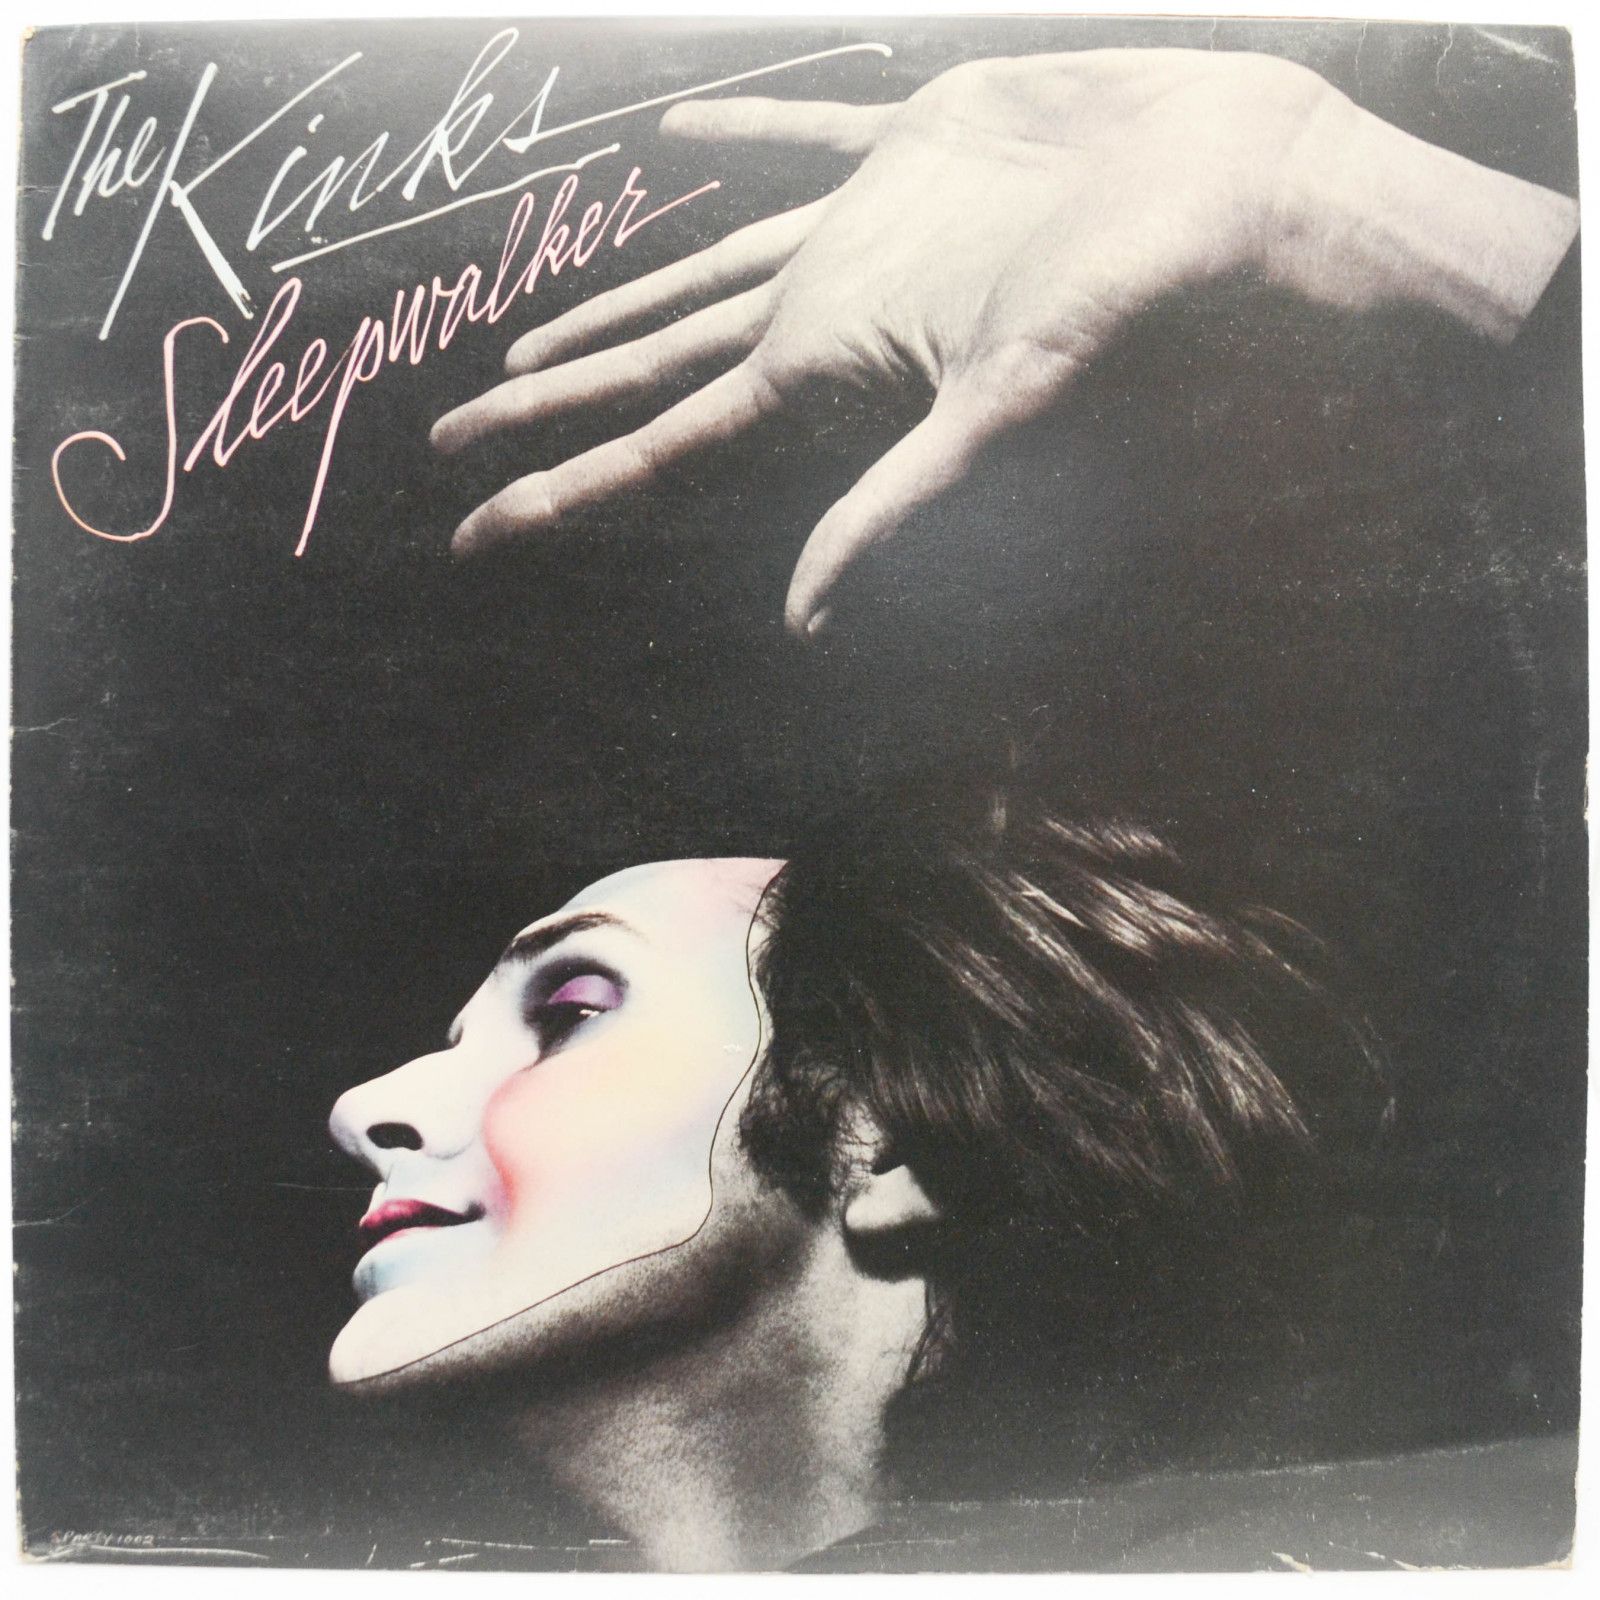 Kinks — Sleepwalker (1-st, UK), 1977